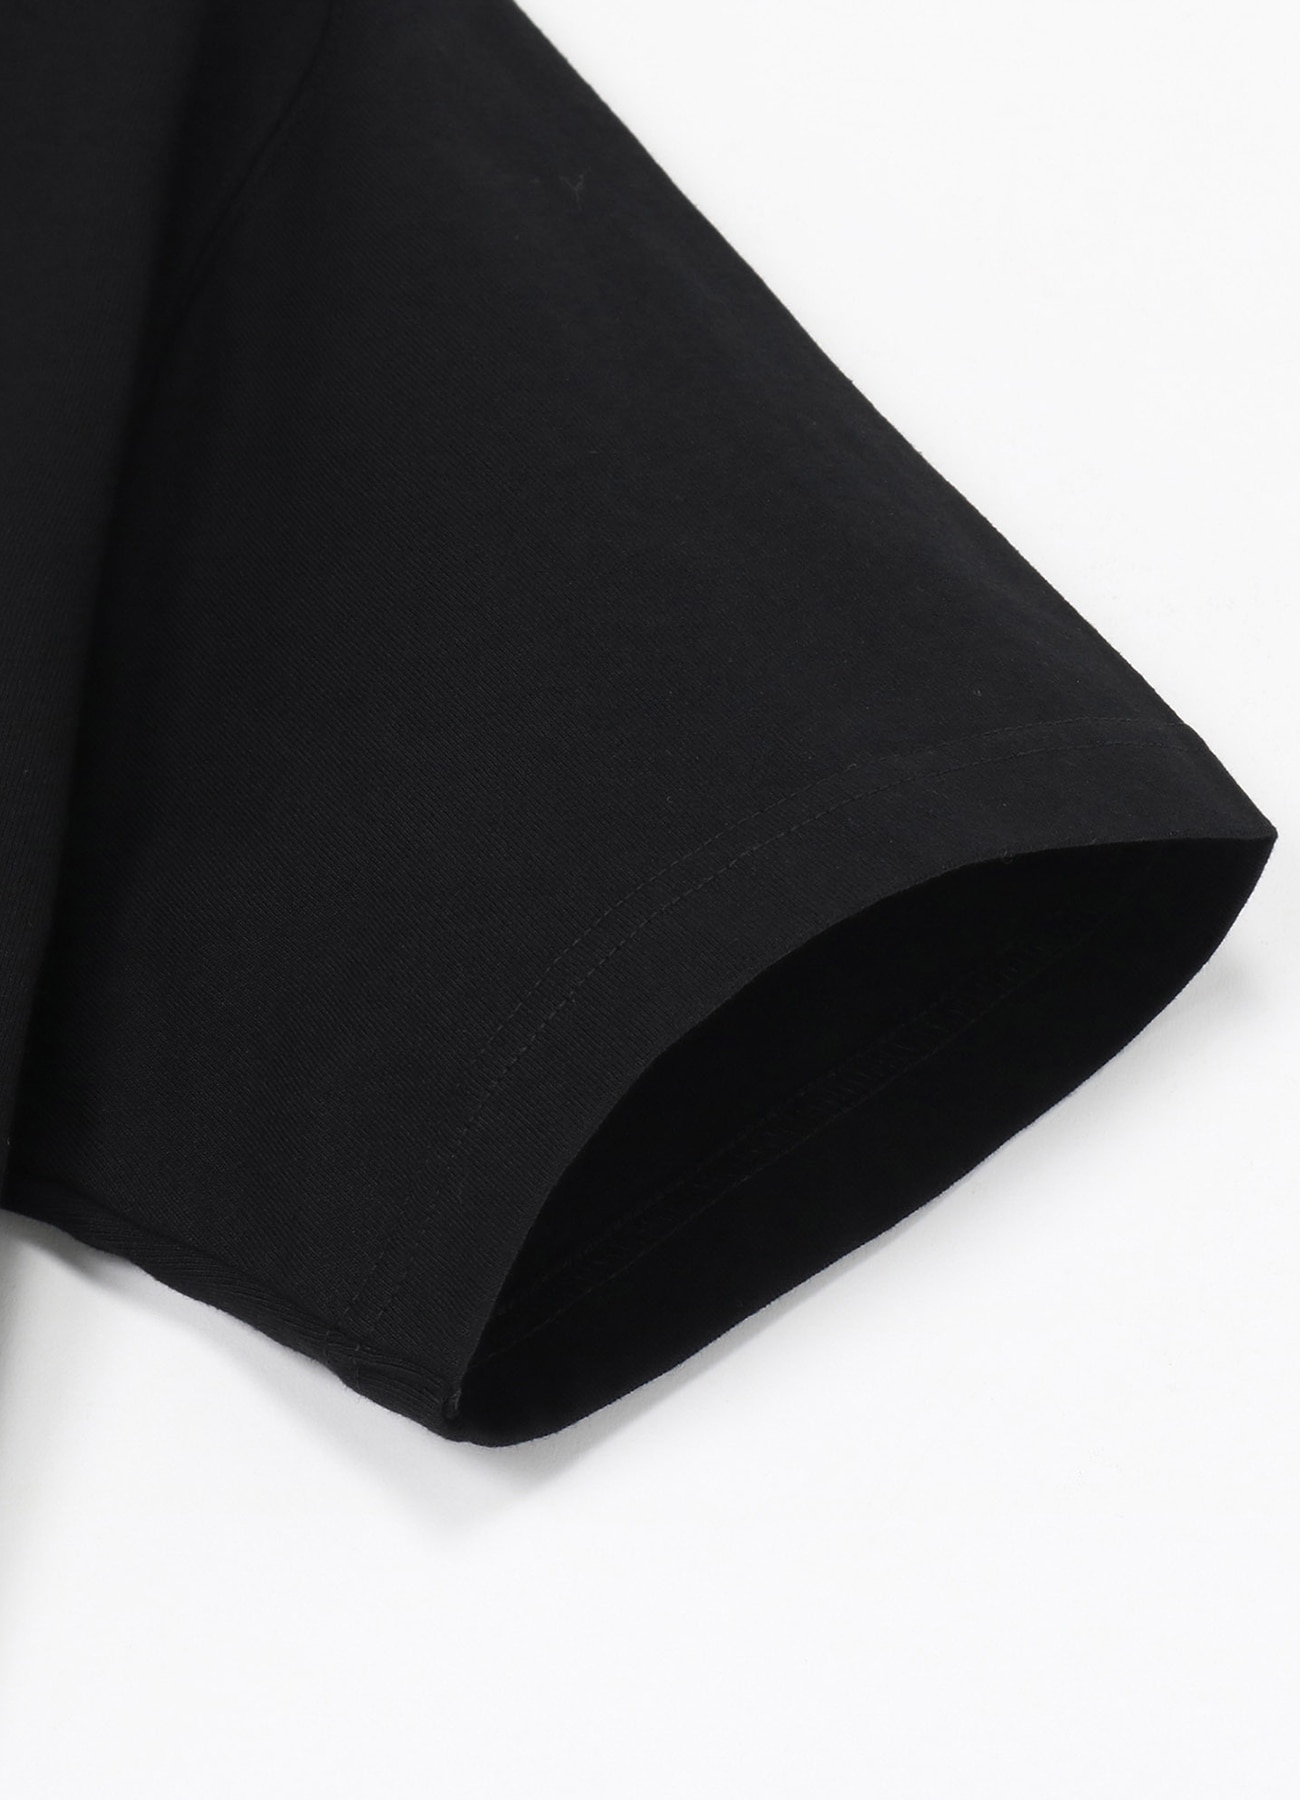 WILDSIDE × BlackEyePatch NOIR EYE PATCH Short Sleeve T-shirt